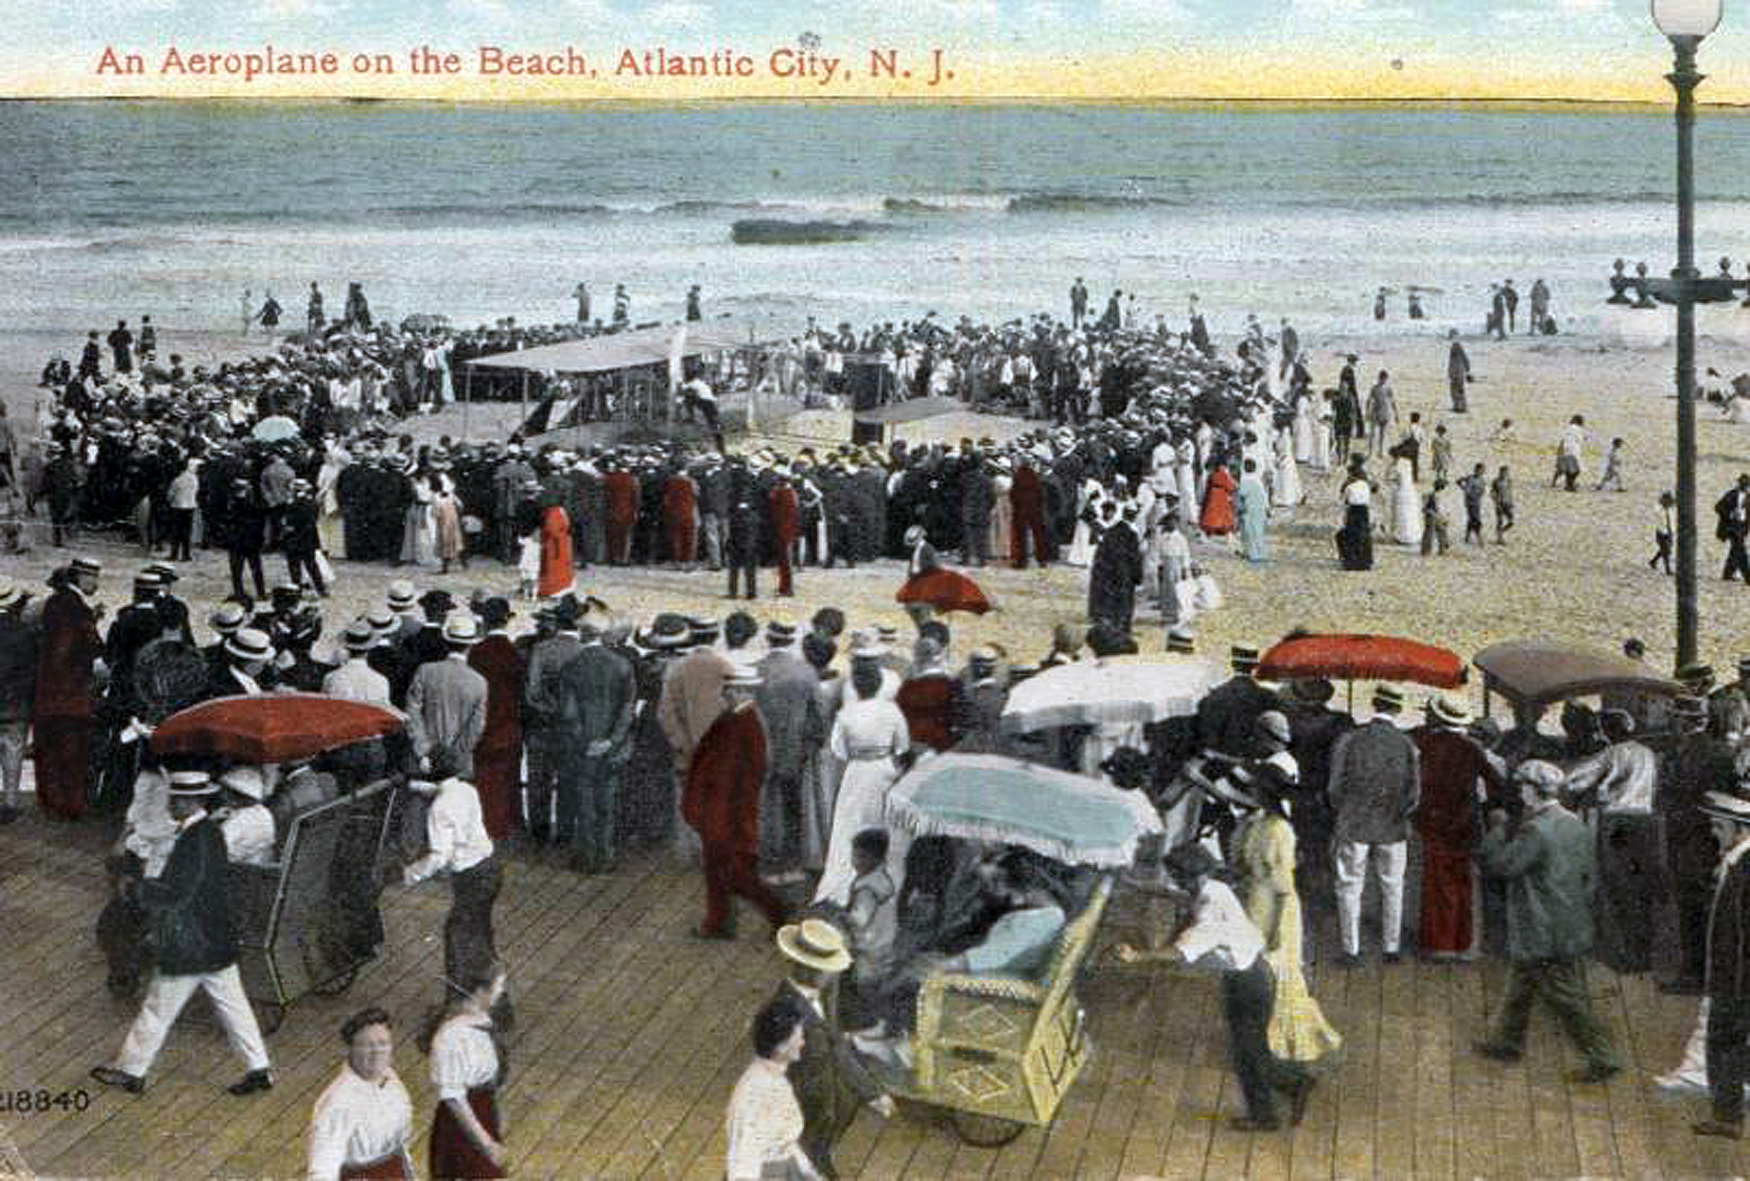 Atlantic City - Airplane on the beach - c 1910